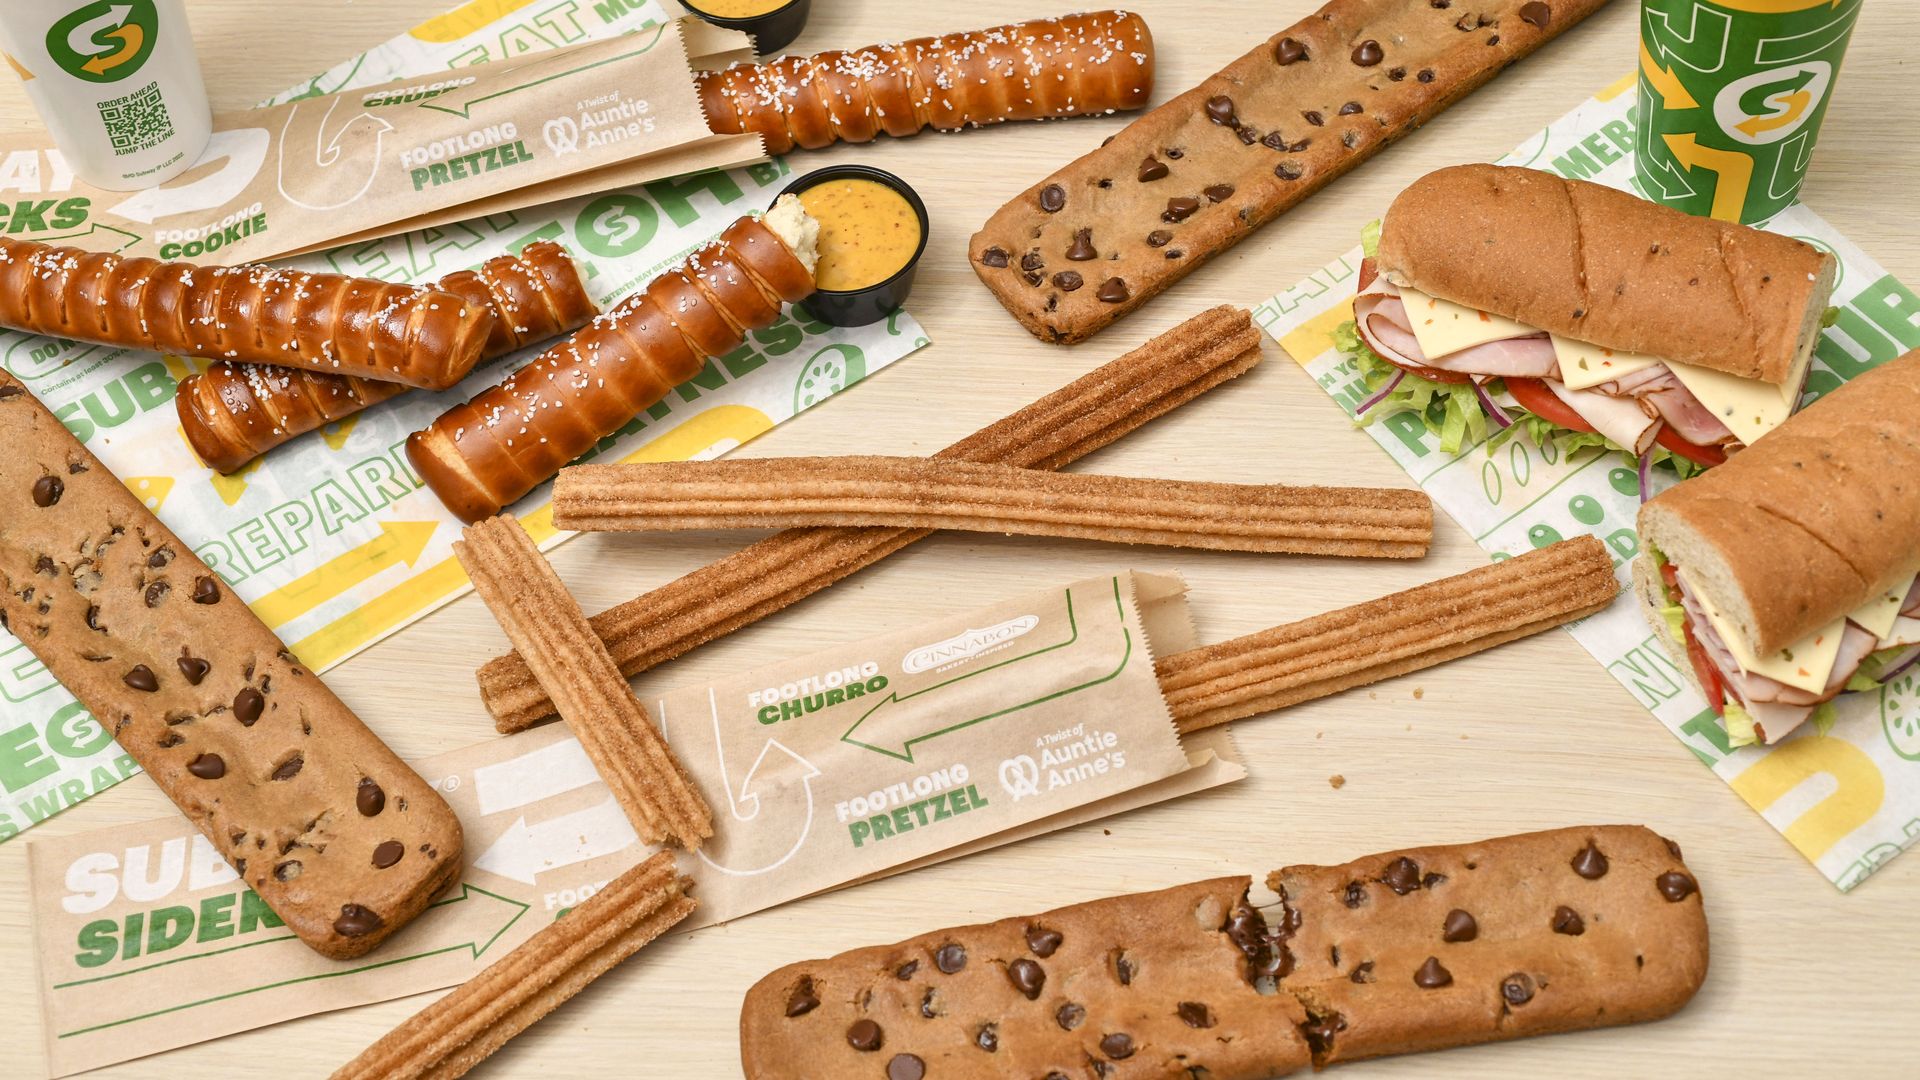 Subway Sidekicks, footlong snacks that include pretzels, churros and cookies